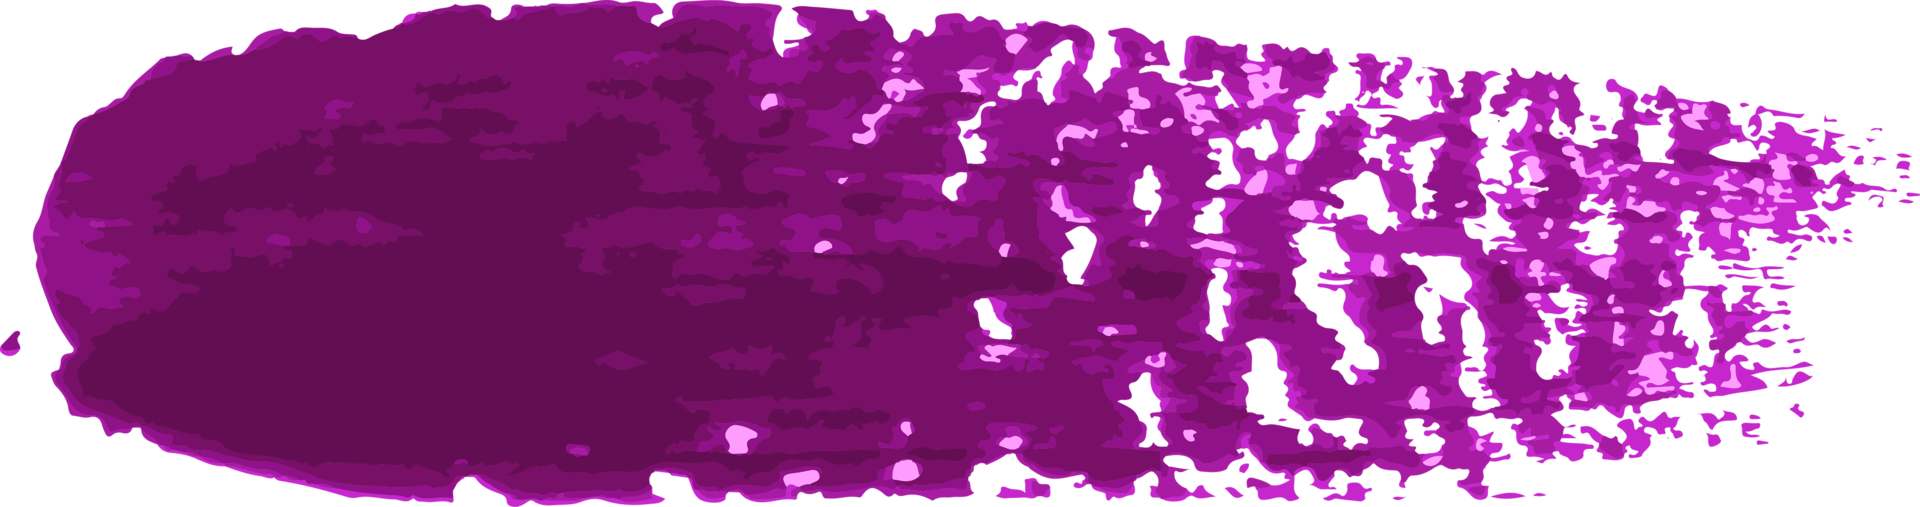 violetter aquarellpinselstrich png